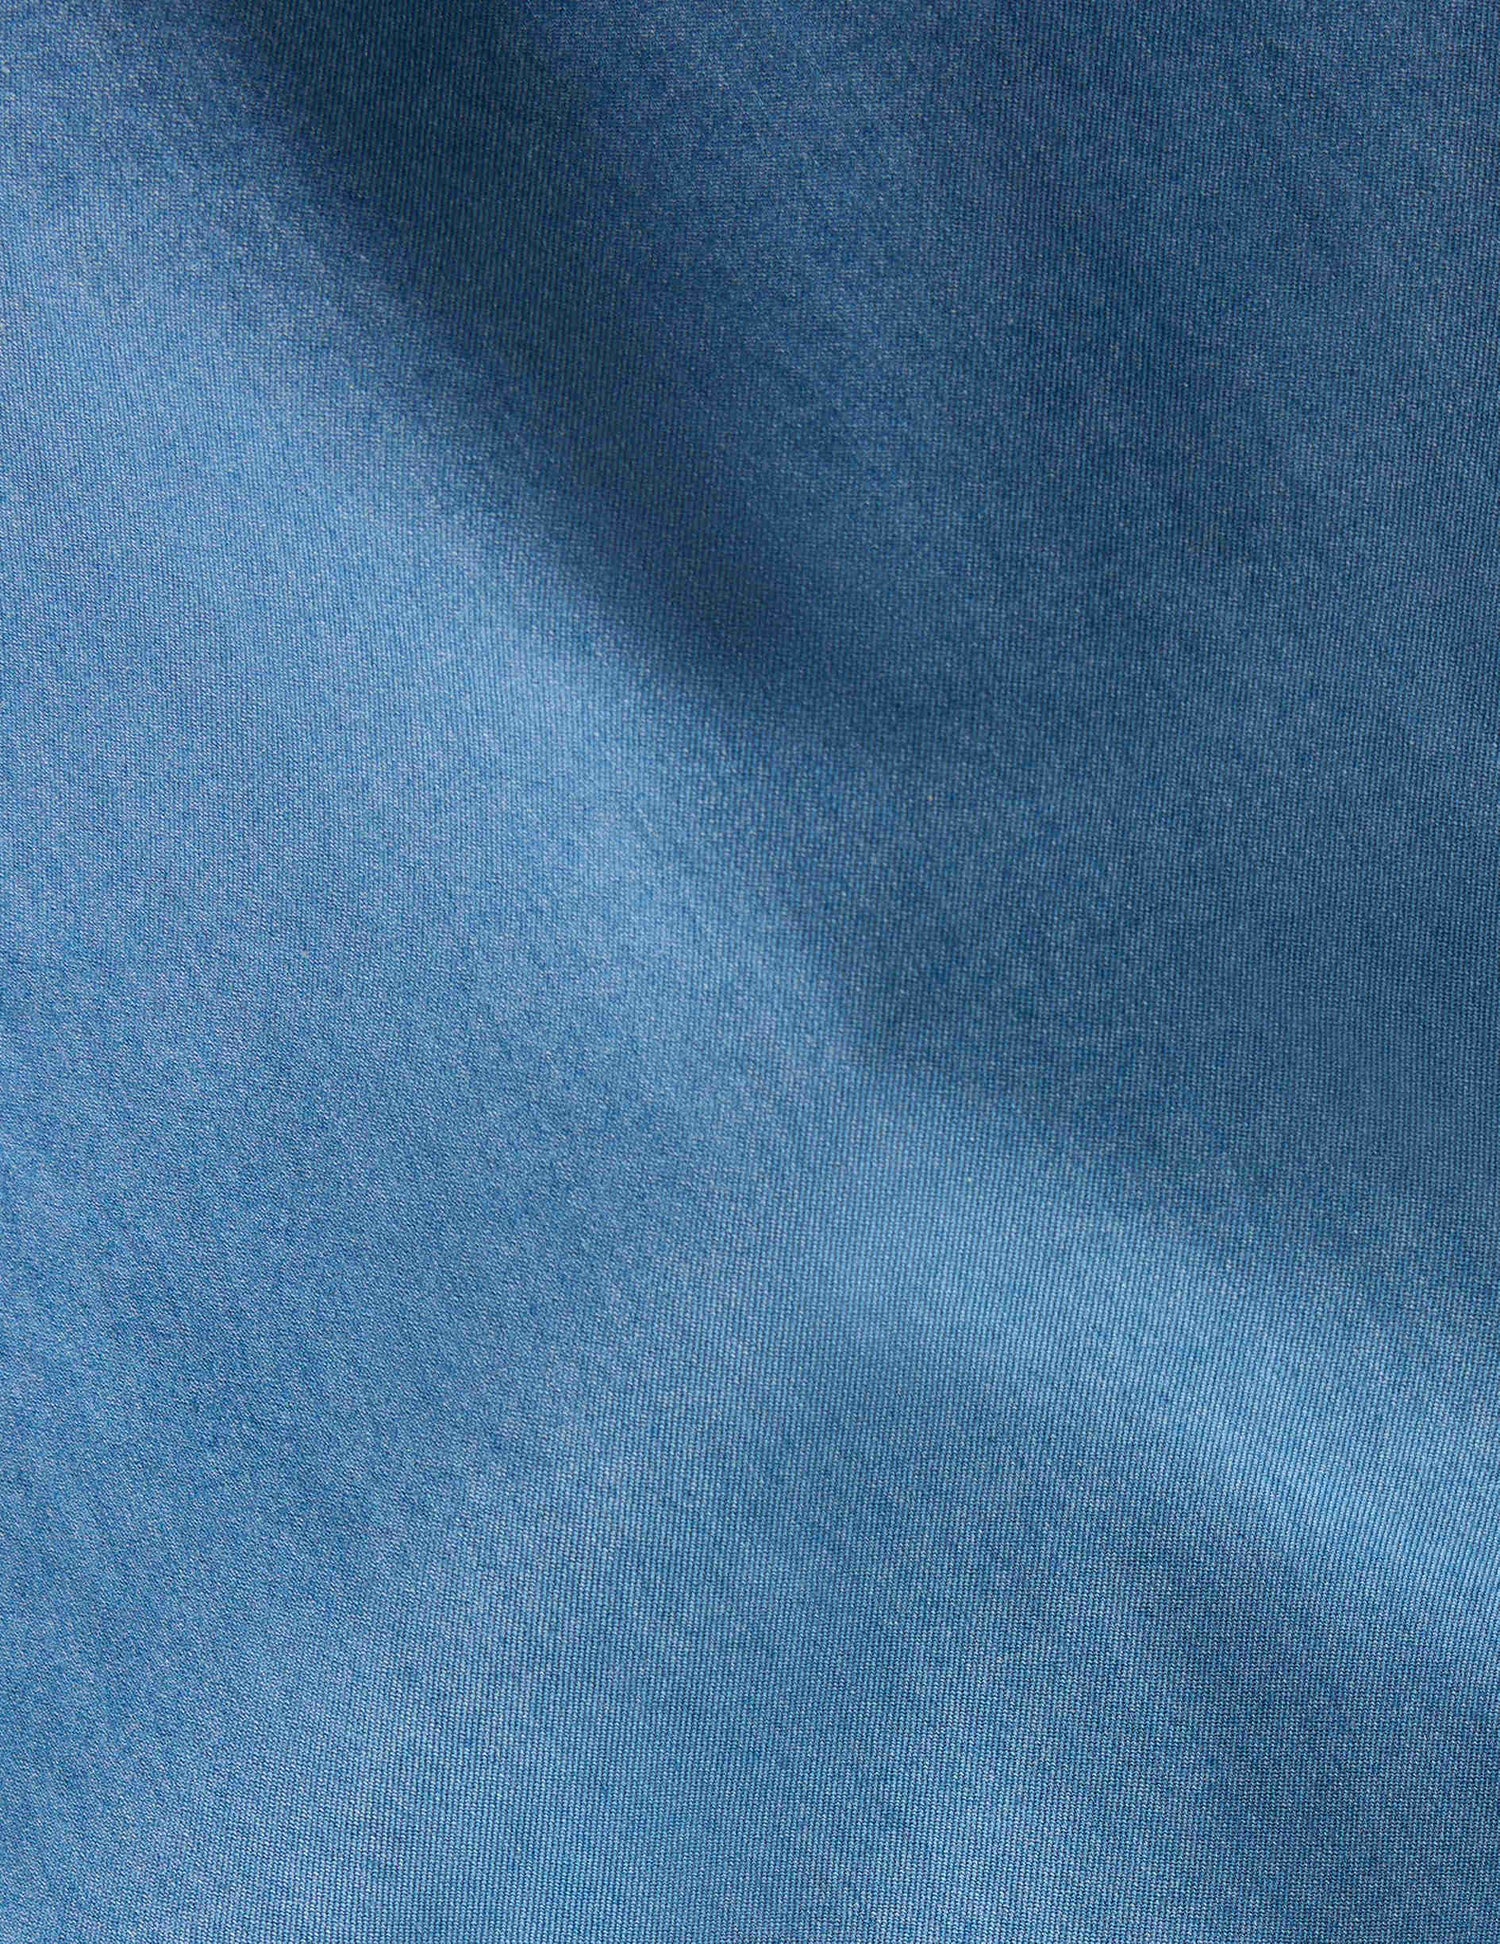 Semi-fitted blue shirt - Twill - American Collar#5